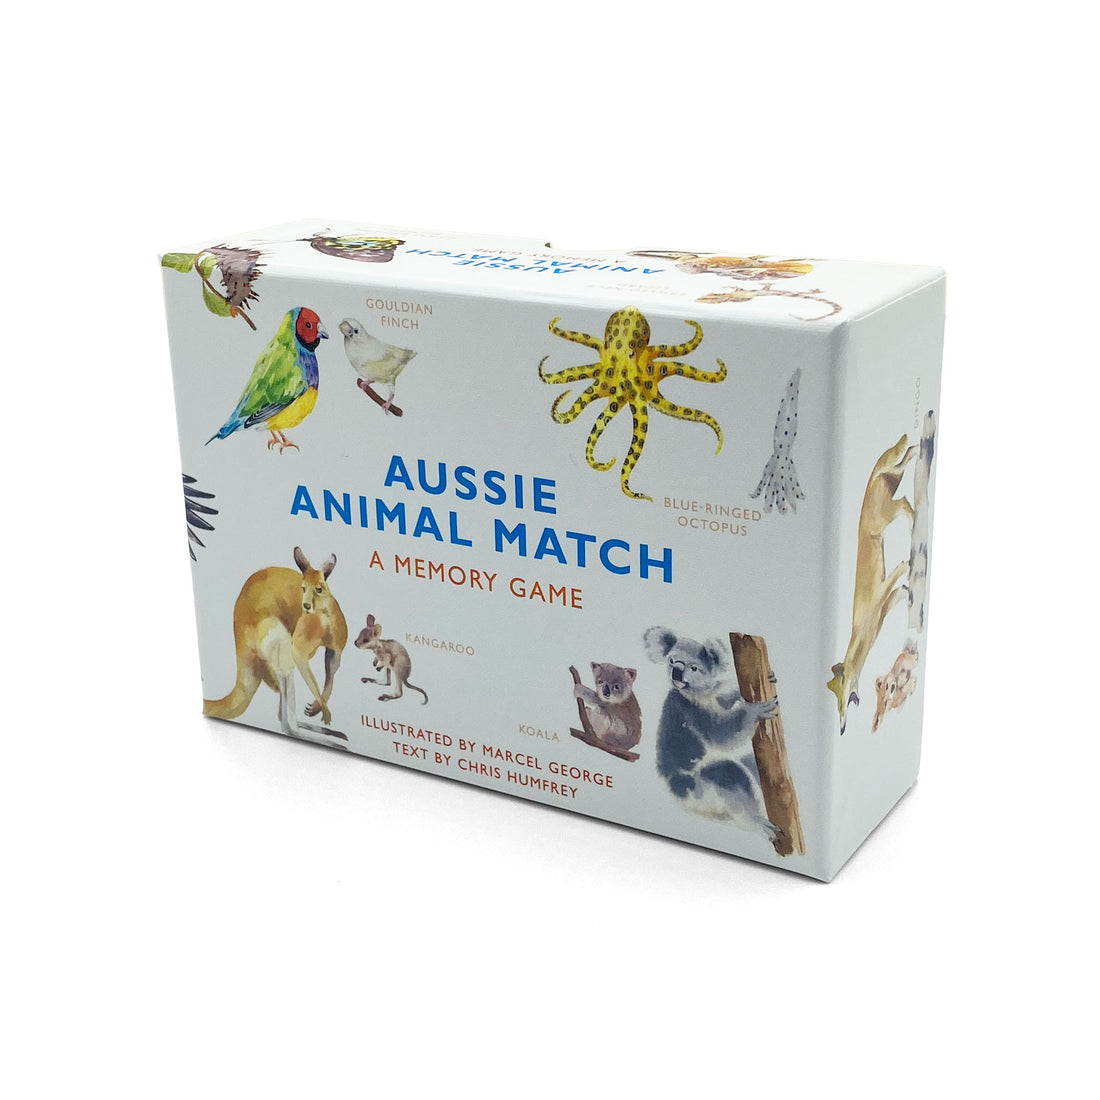 Aussie Animal Match memory matching game